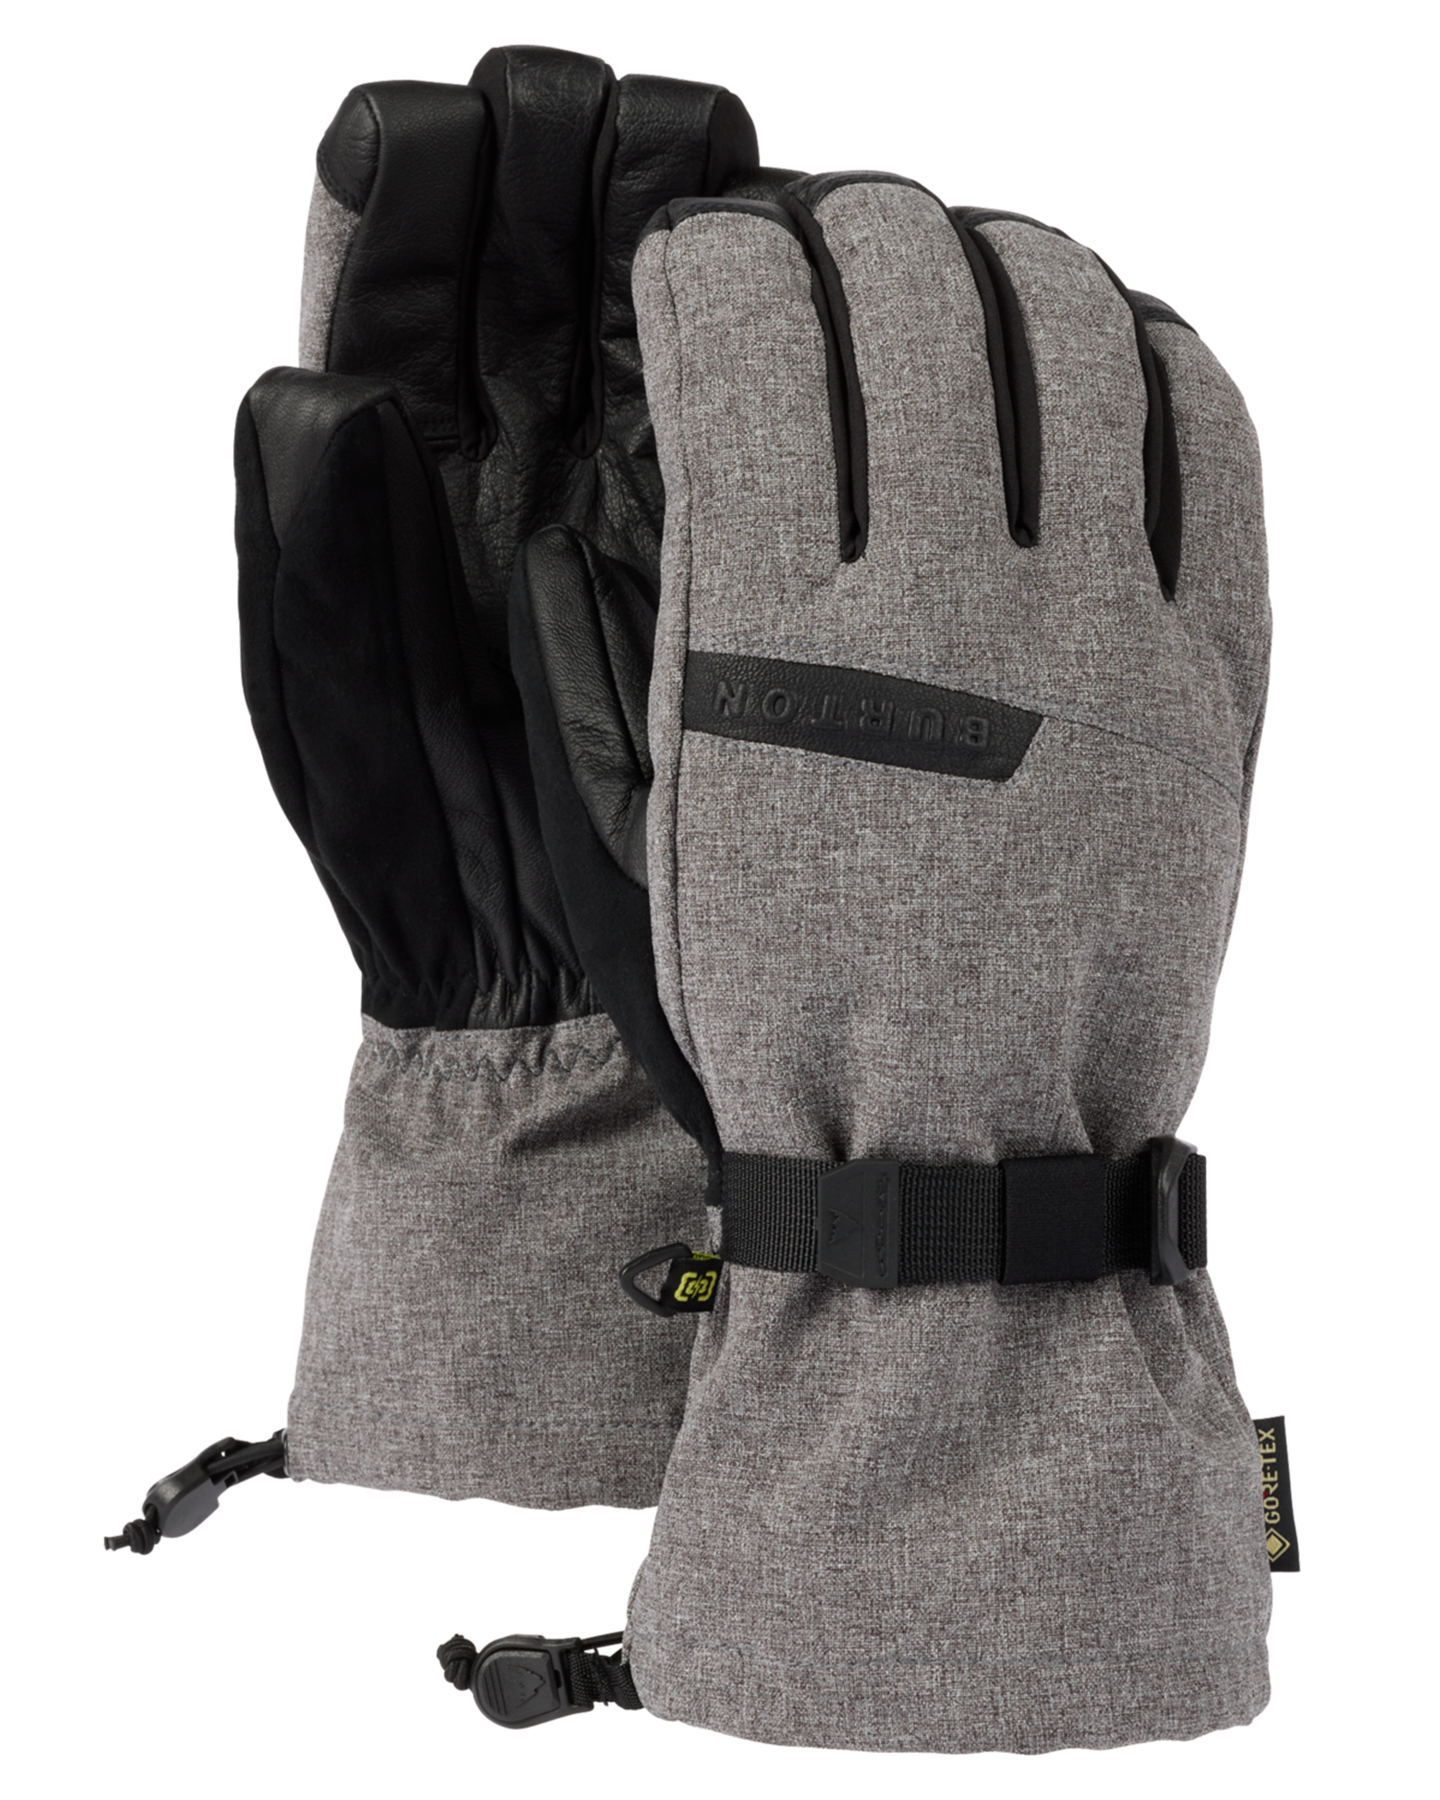 Burton Men's Deluxe Gore-Tex Snow Gloves - Gray Heather Men's Snow Gloves & Mittens - Trojan Wake Ski Snow